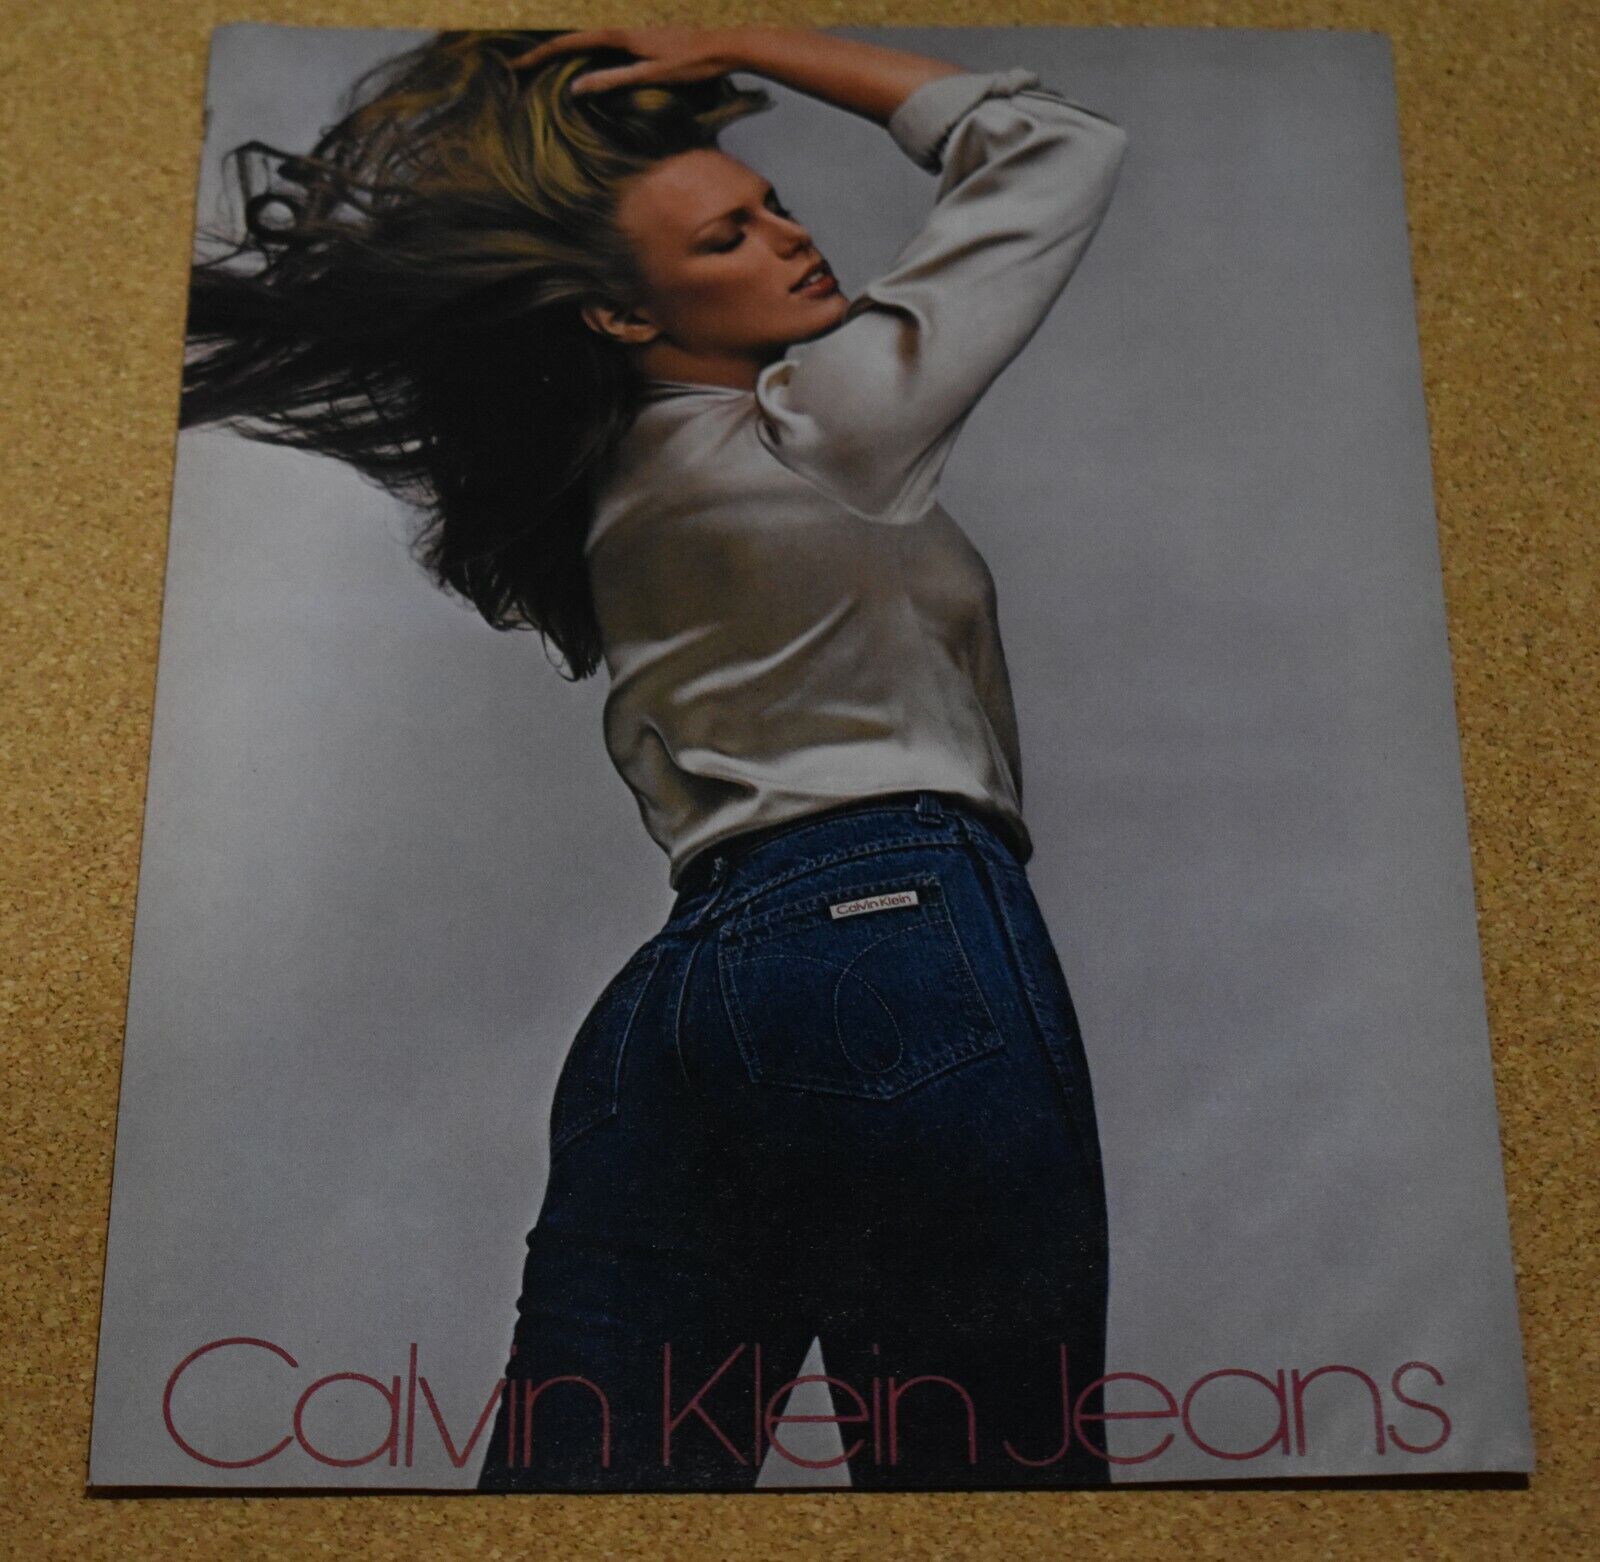 1980 Print Ad Calvin Klein Blue Jeans lady lipstick hair style fashion sexy art